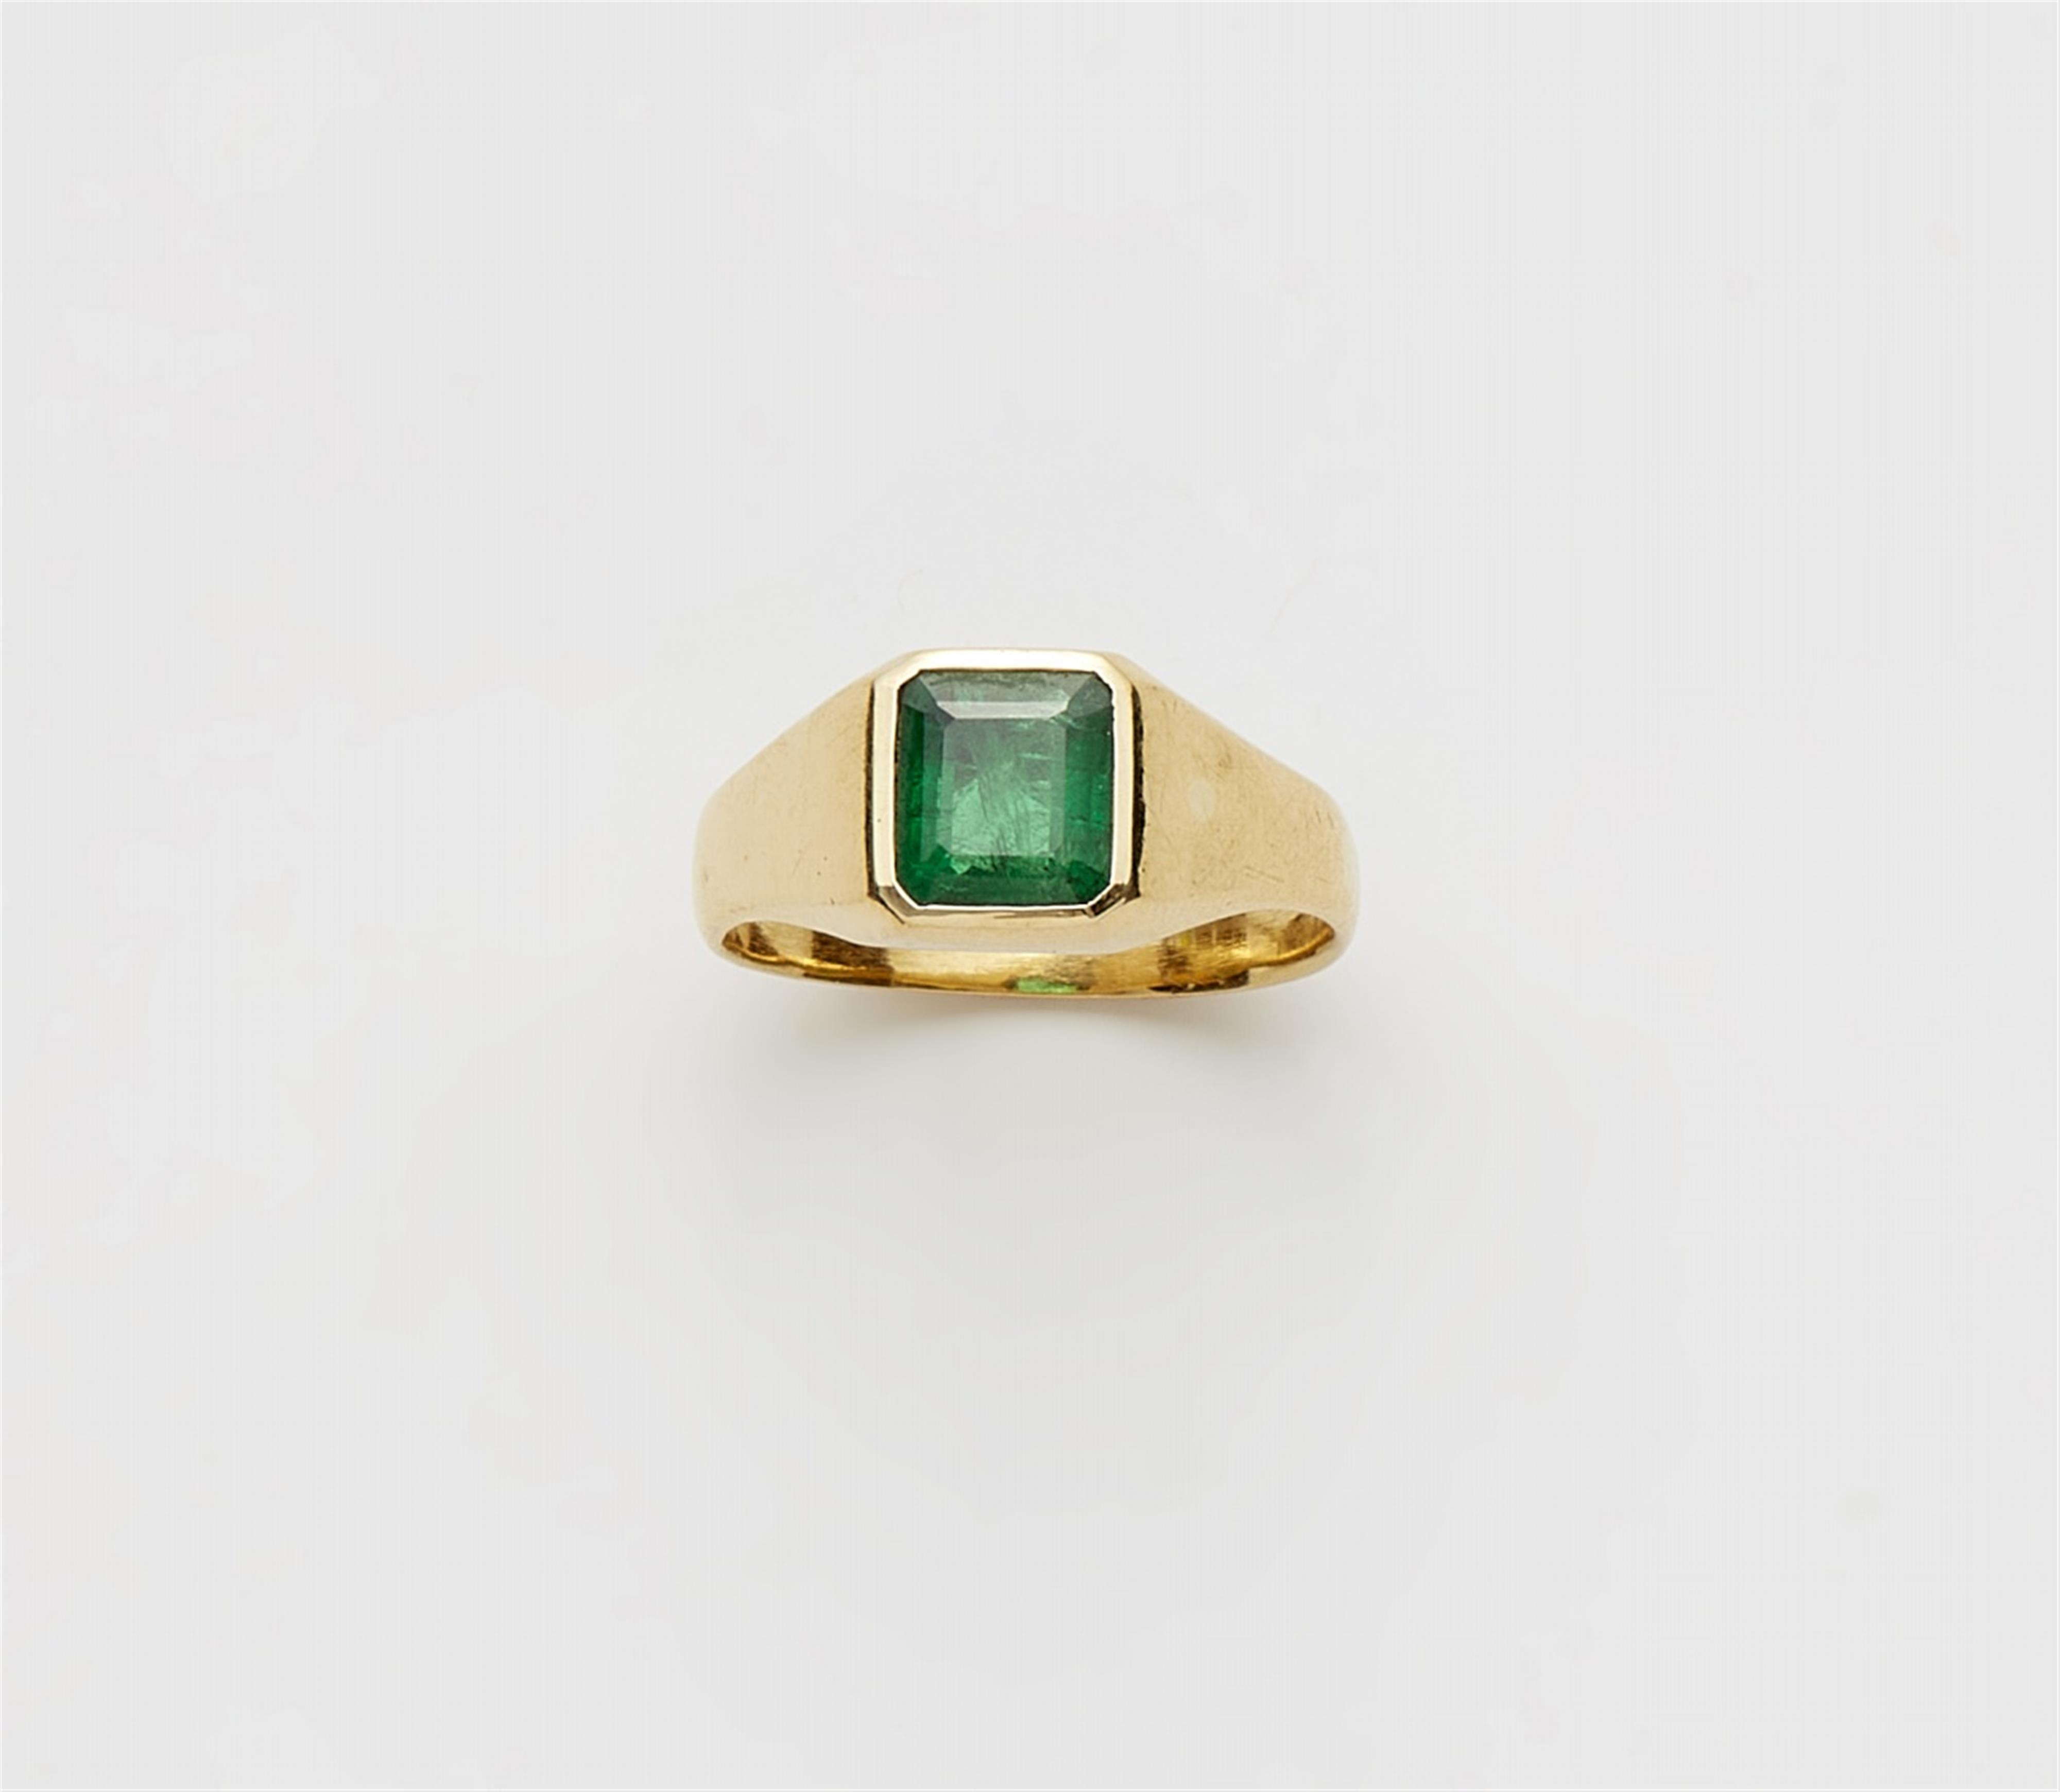 A gentlemen's 22k gold emerald ring - Lot 220